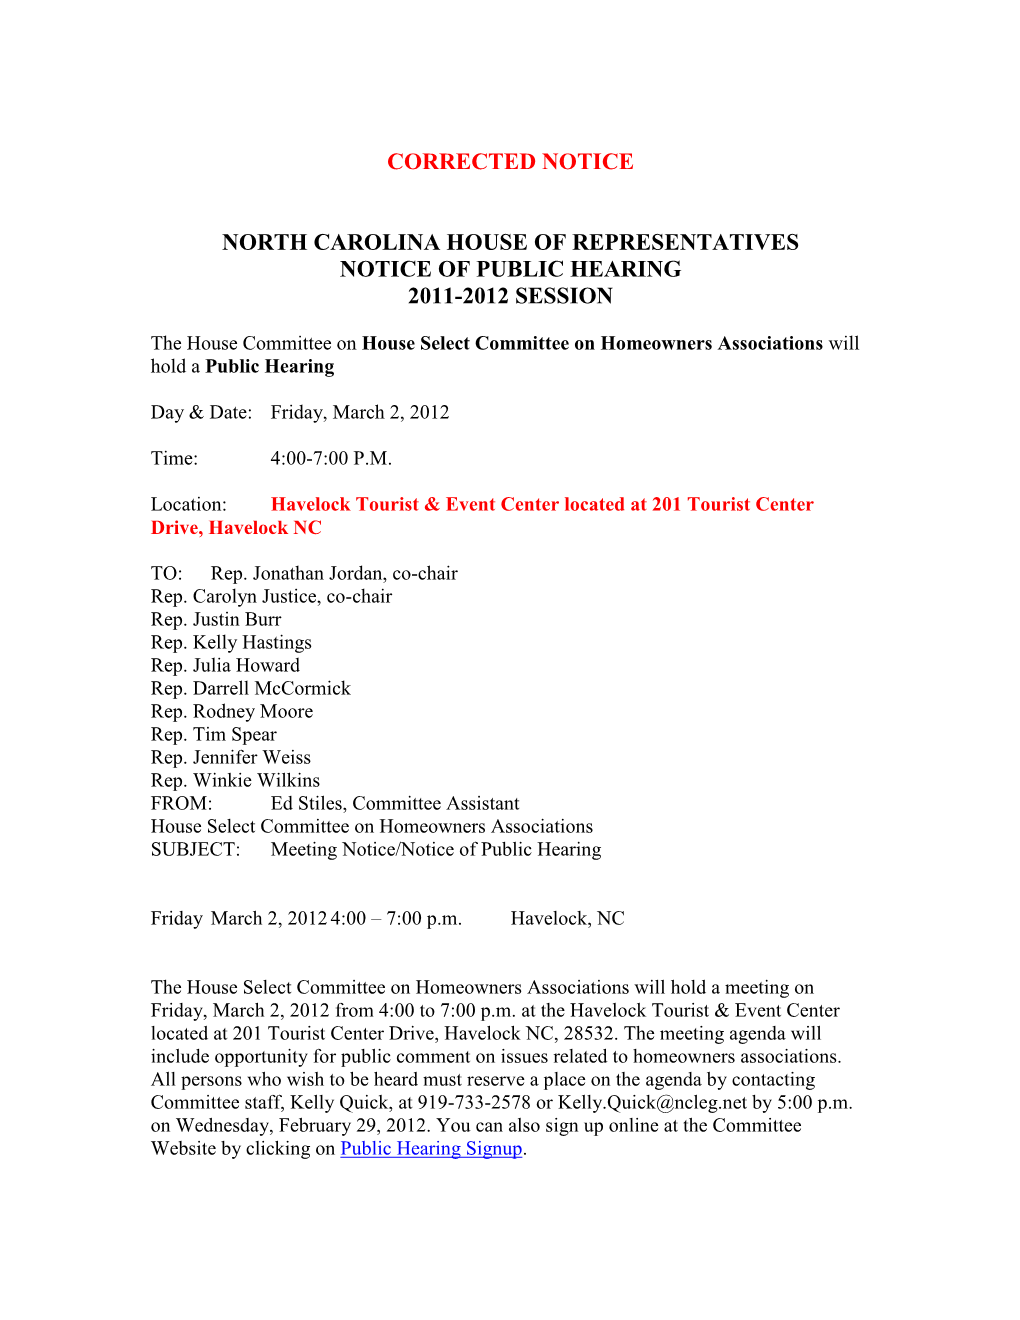 North Carolina House of Representatives Notice of Public Hearing 2011-2012 Session